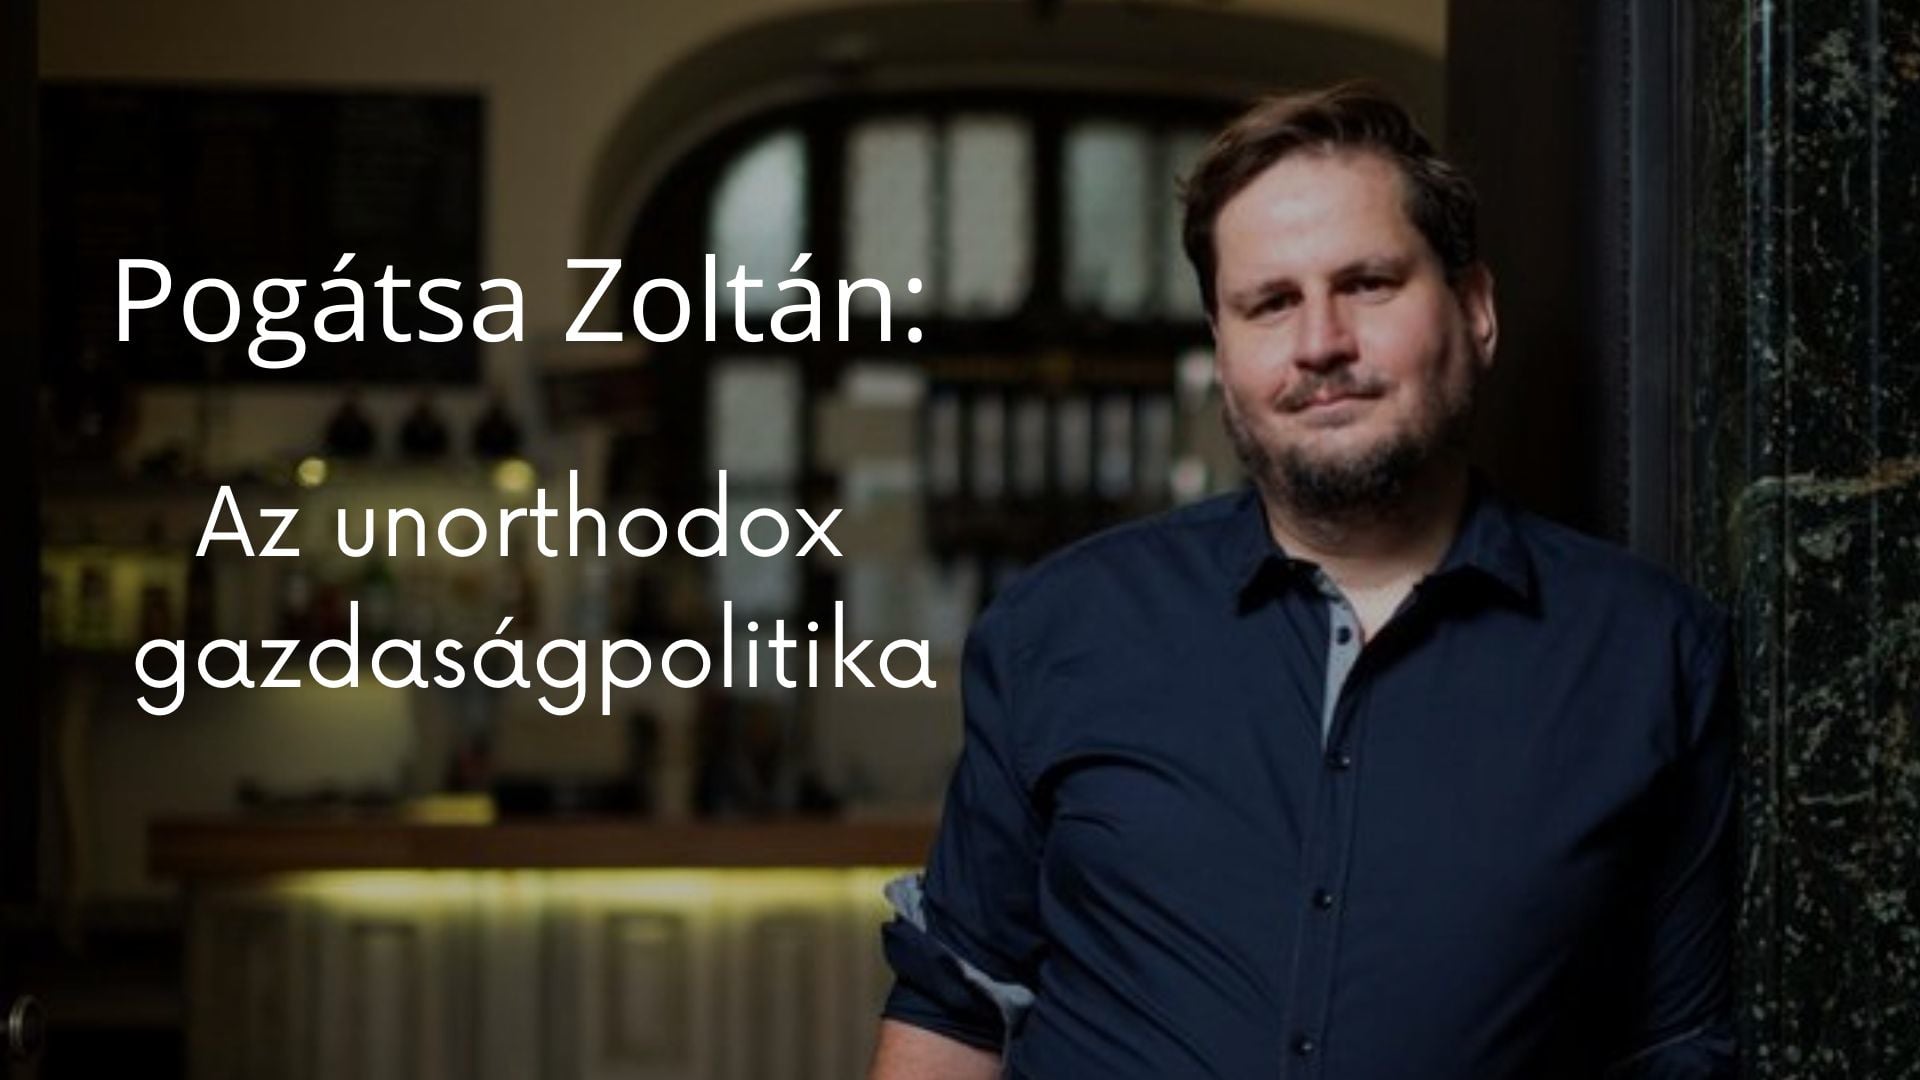 Dr. Pogátsa Zoltán:Az unorthodox gazdaságpolitika